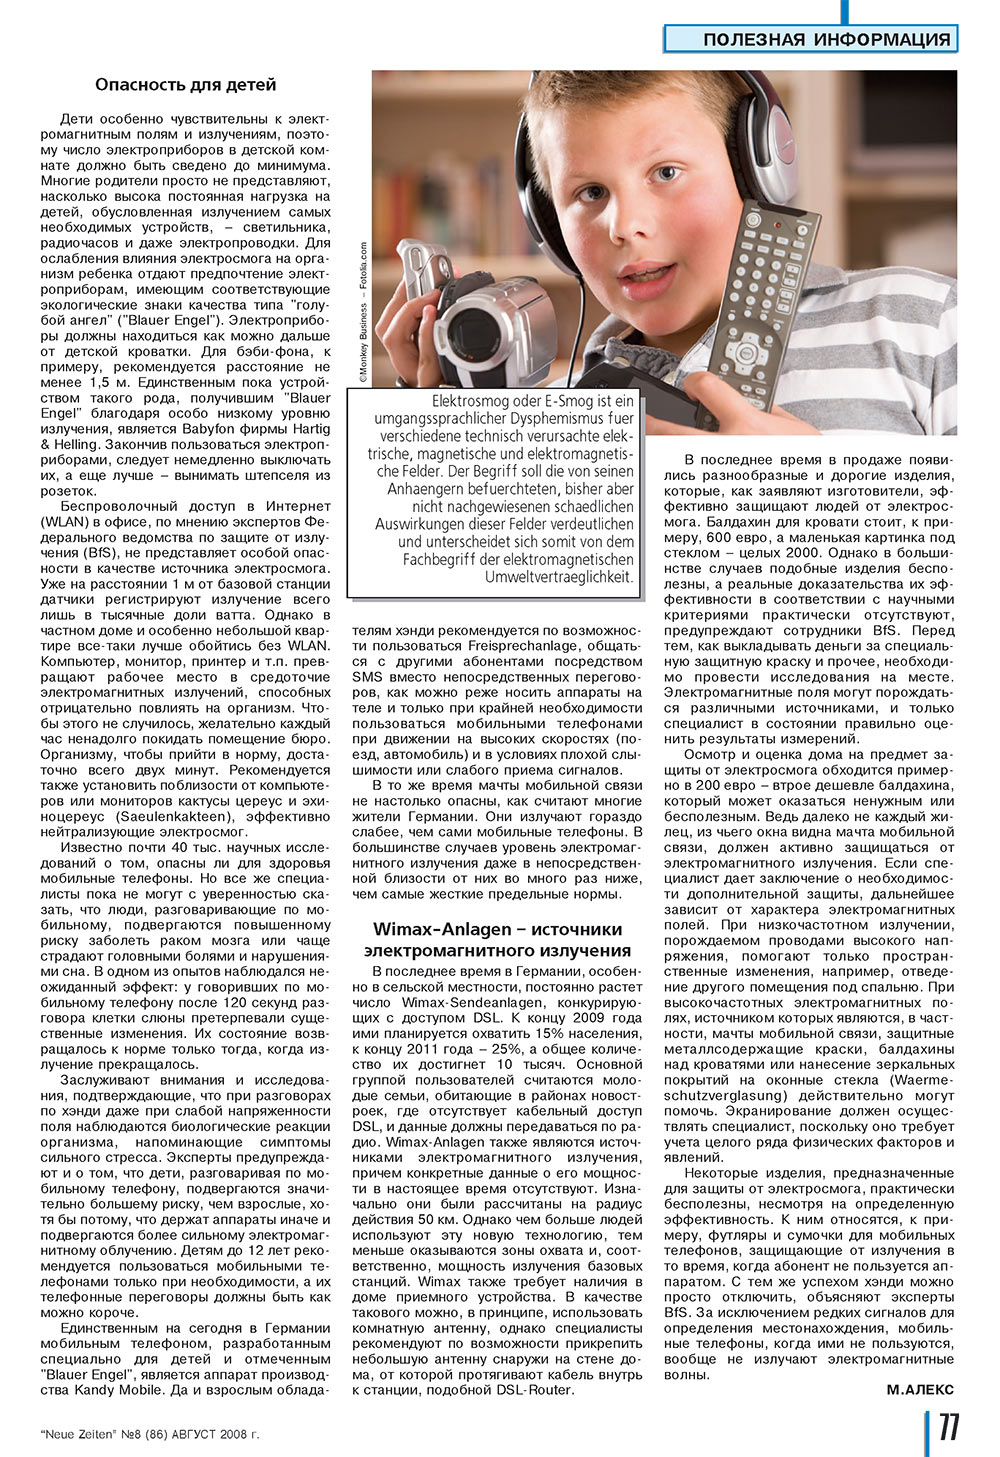 Neue Zeiten (журнал). 2008 год, номер 8, стр. 77